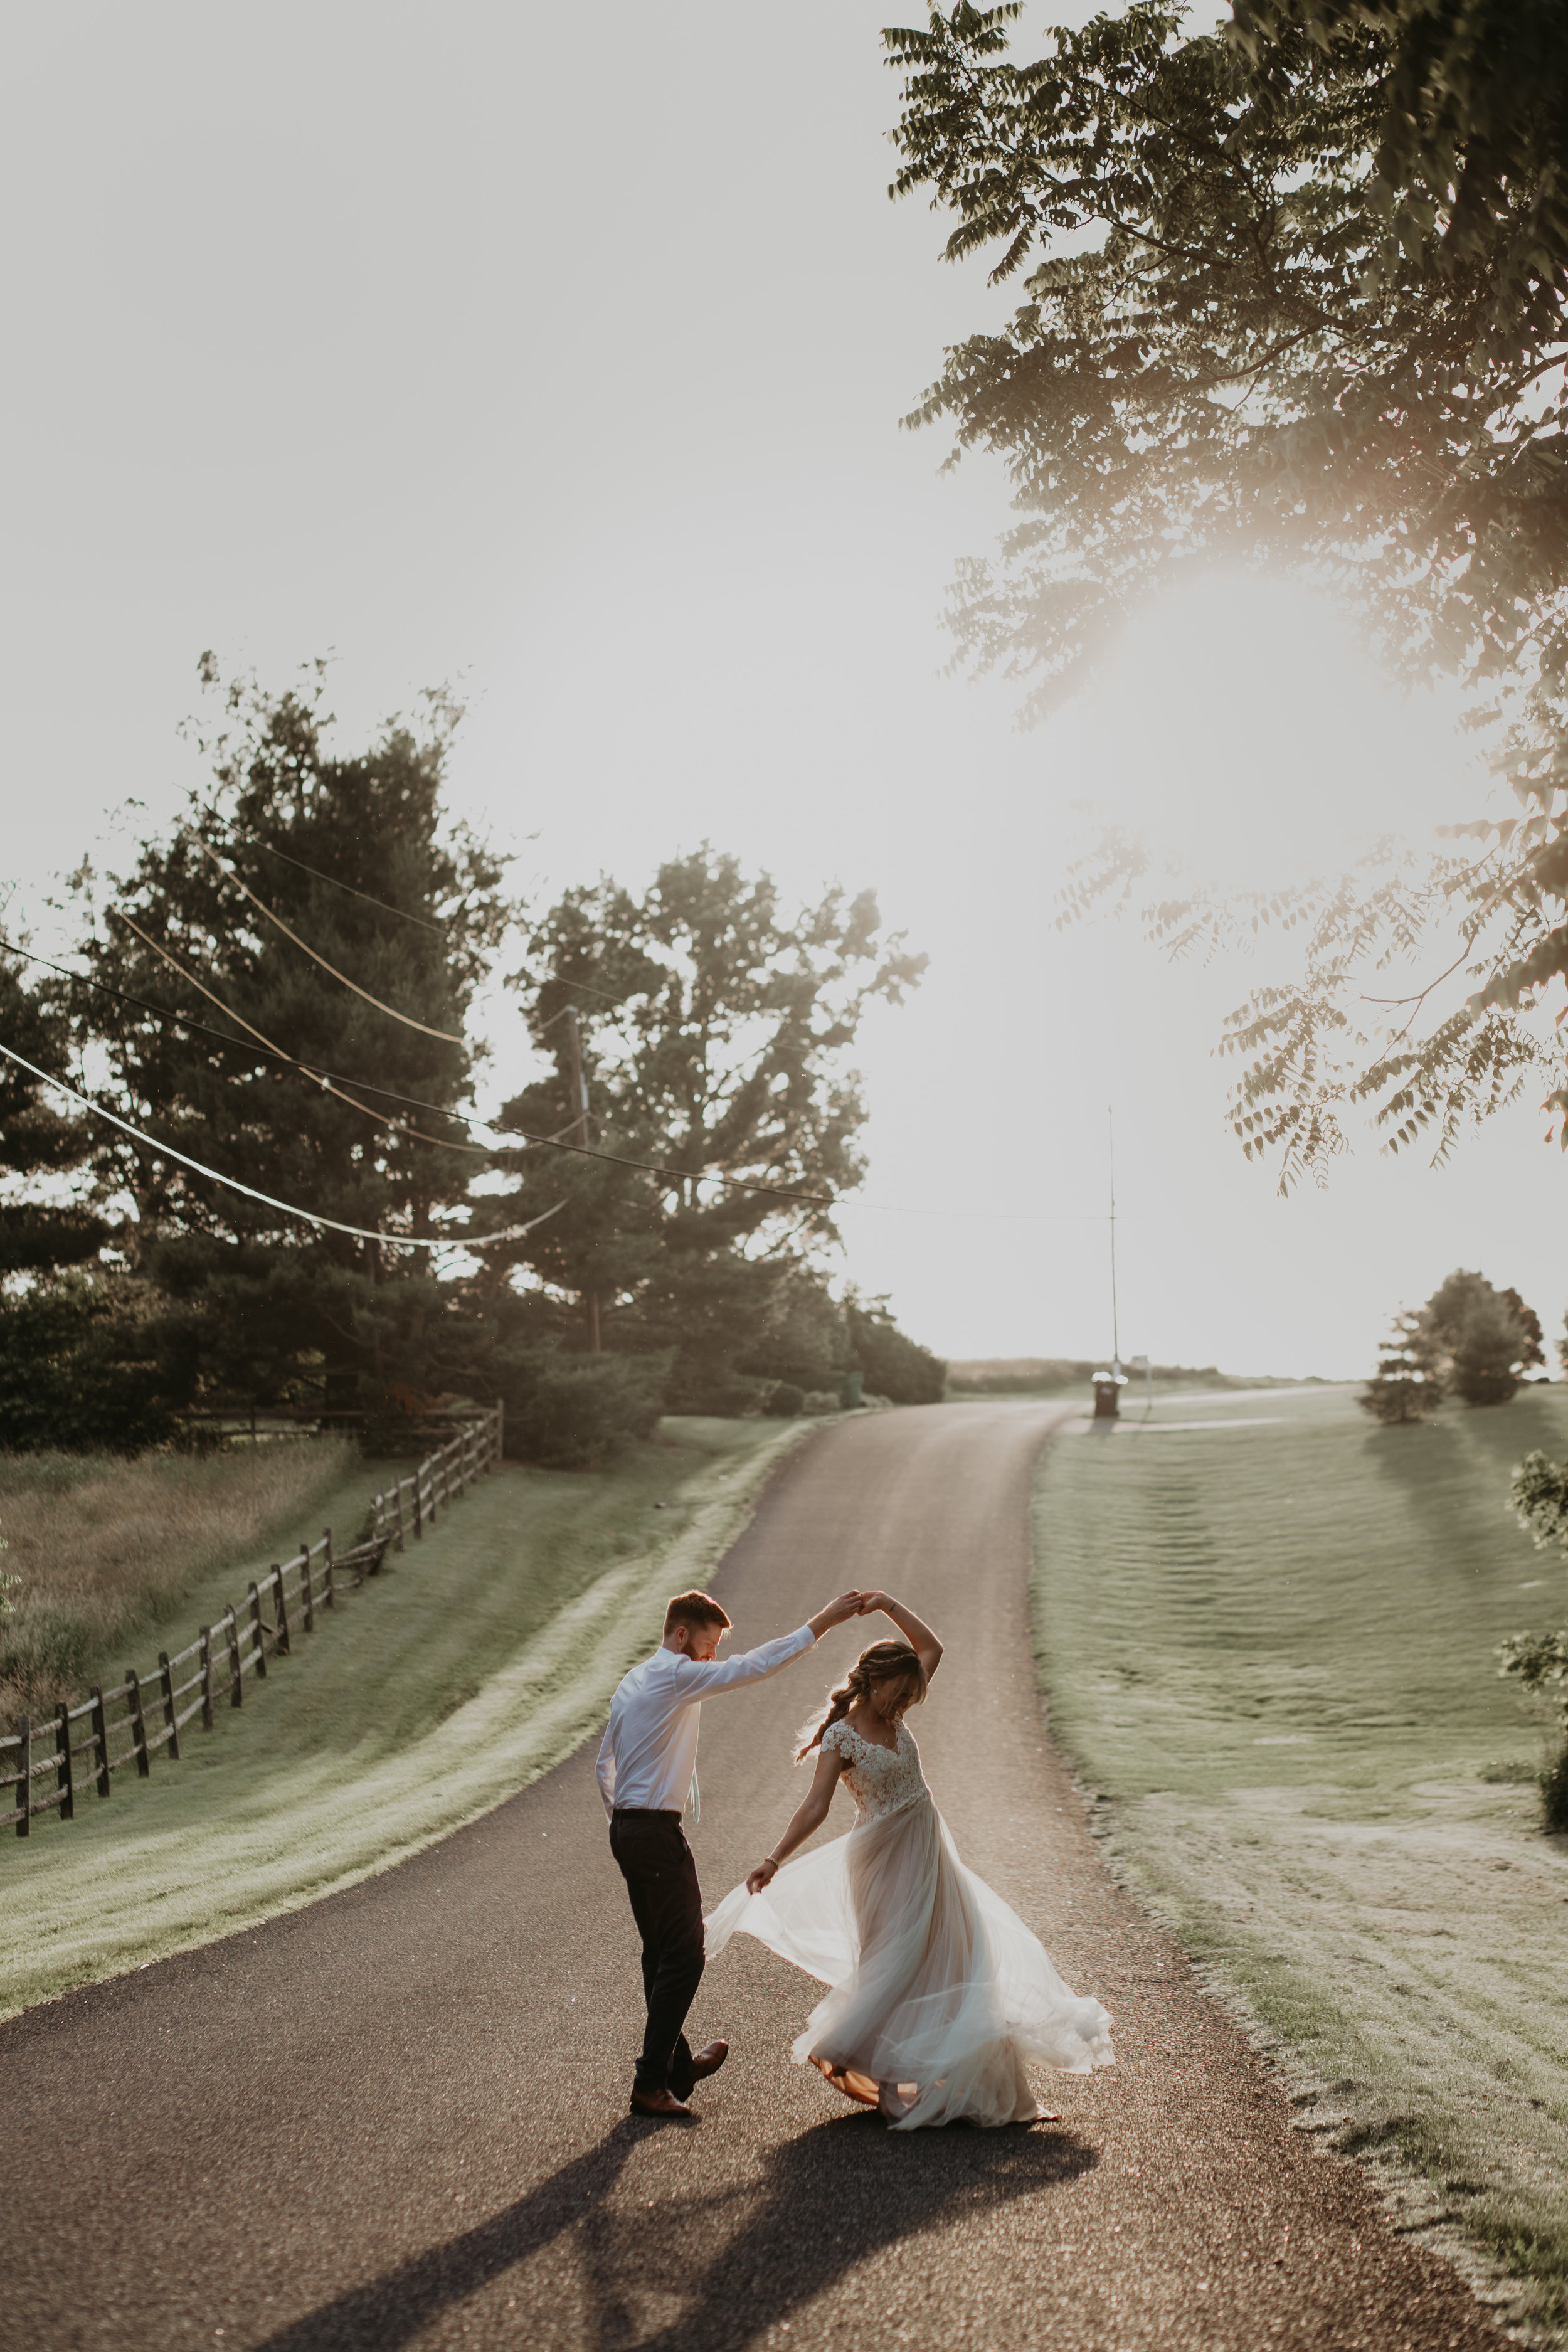 Nicole-Daacke-Photography-pennsylvania-laid-back-outside-backyard-wedding-family-summer-june-maryland-barefoot-bride-woodland-trees-sunset-couple-76.jpg